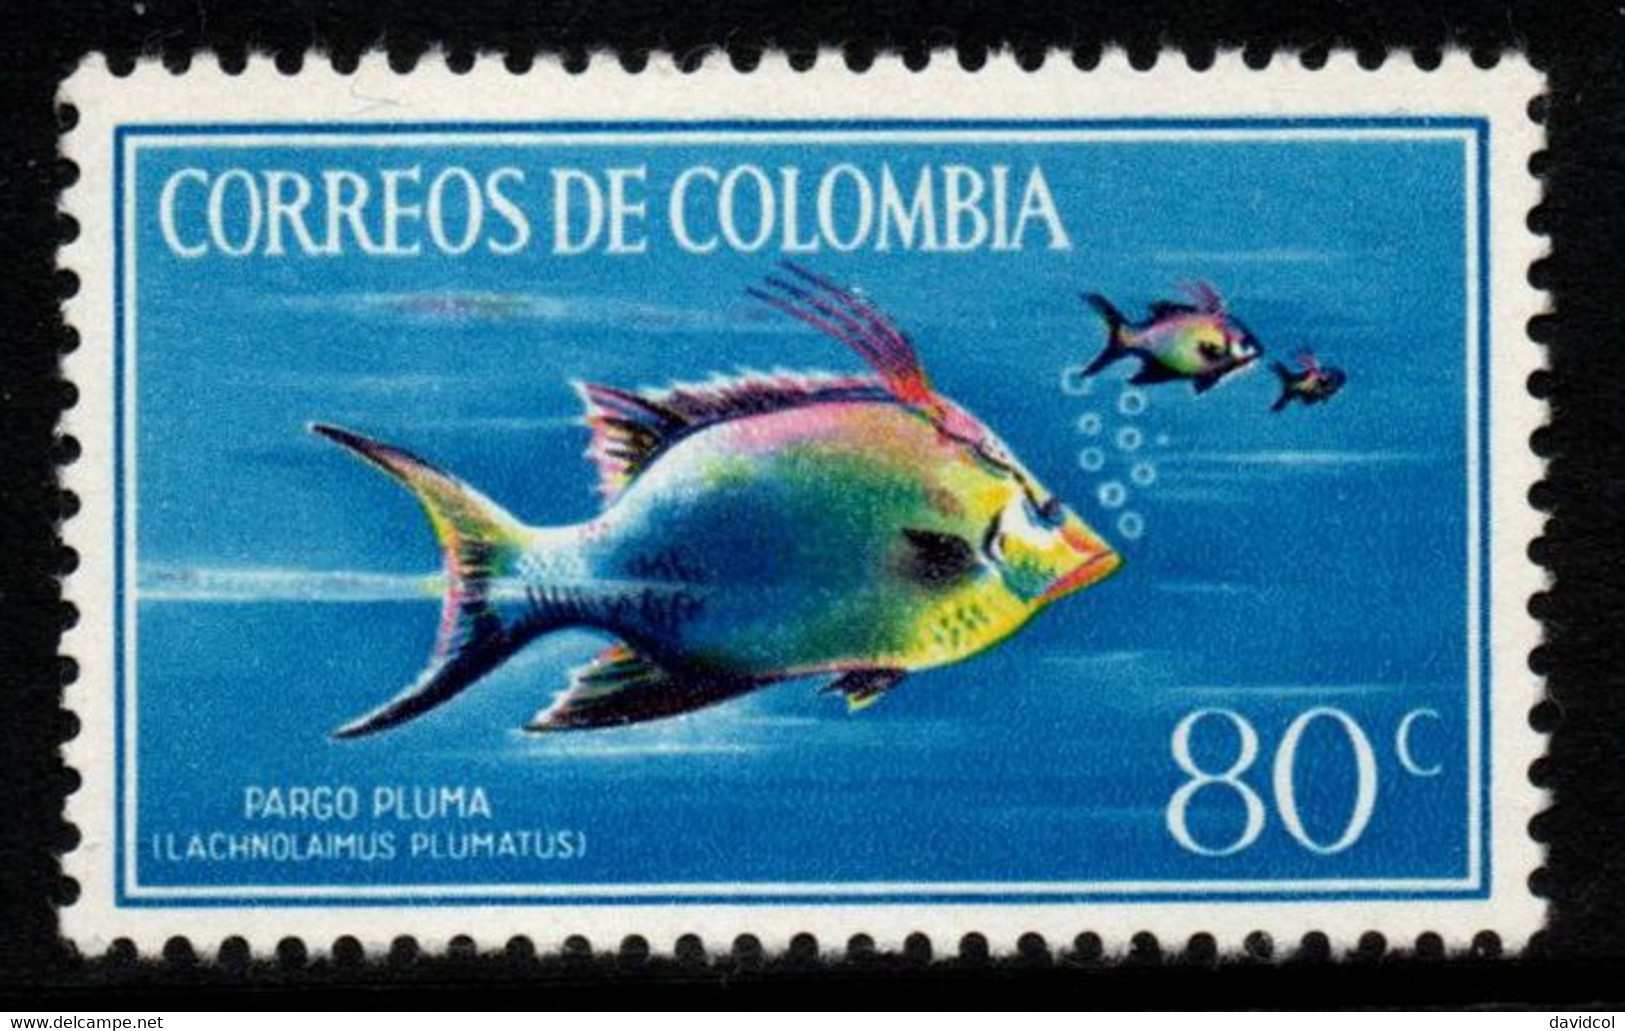 05A- KOLUMBIEN – 1966- MI#:1078 - MNH- PARGO PLUMA (LACHNOLAIMUS PLUMATUS) - FISHES. MARINE LIFE / FAUNA / FISH - Kolumbien